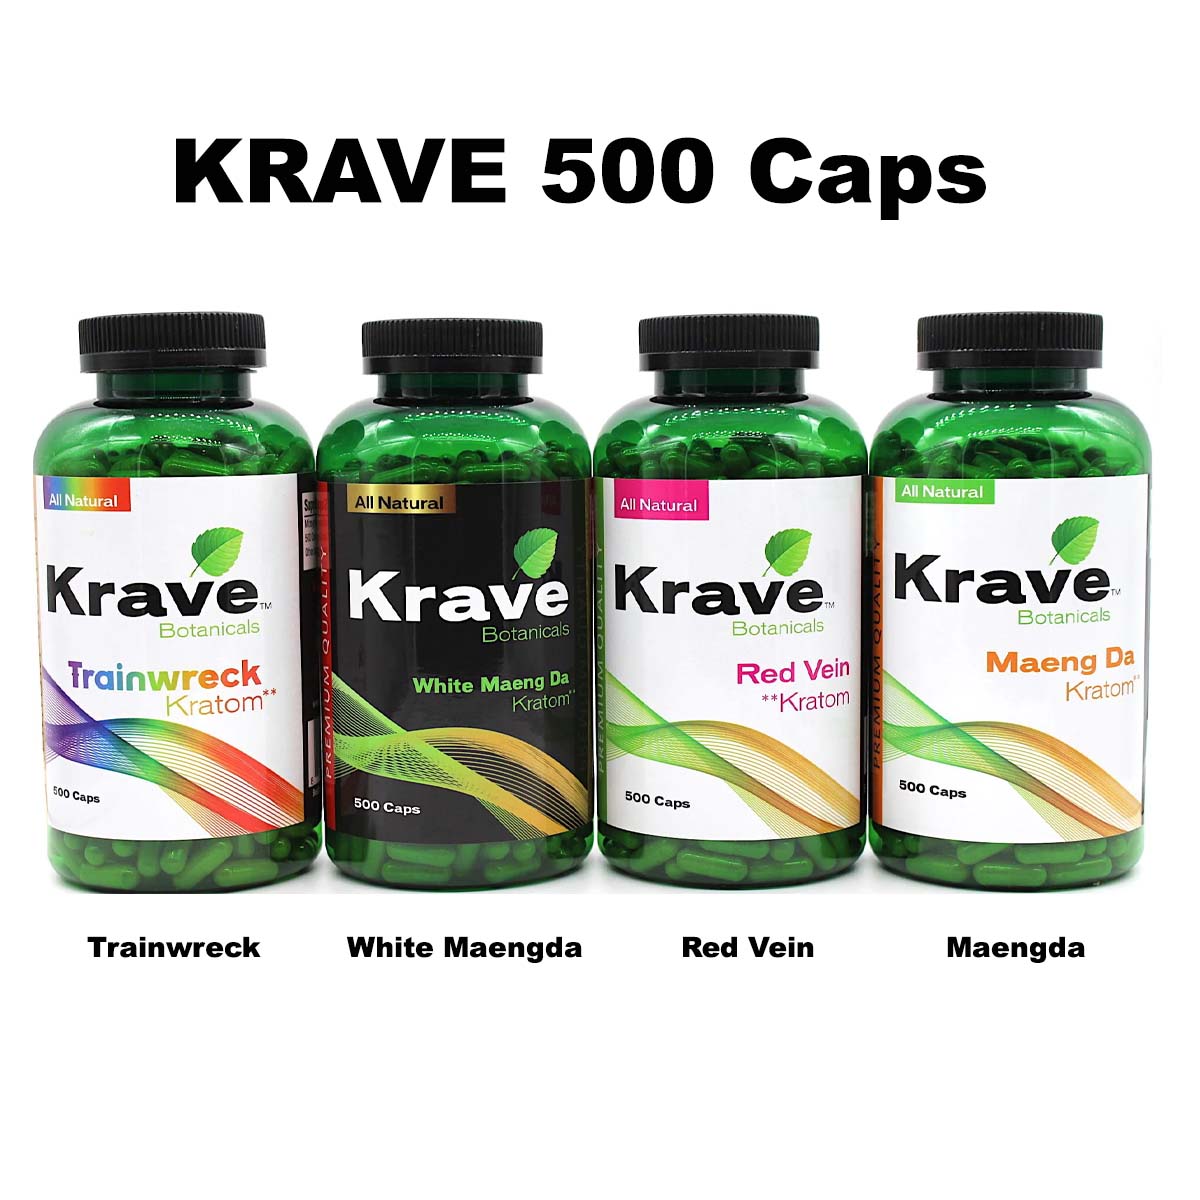 KRAVE 500 Caps